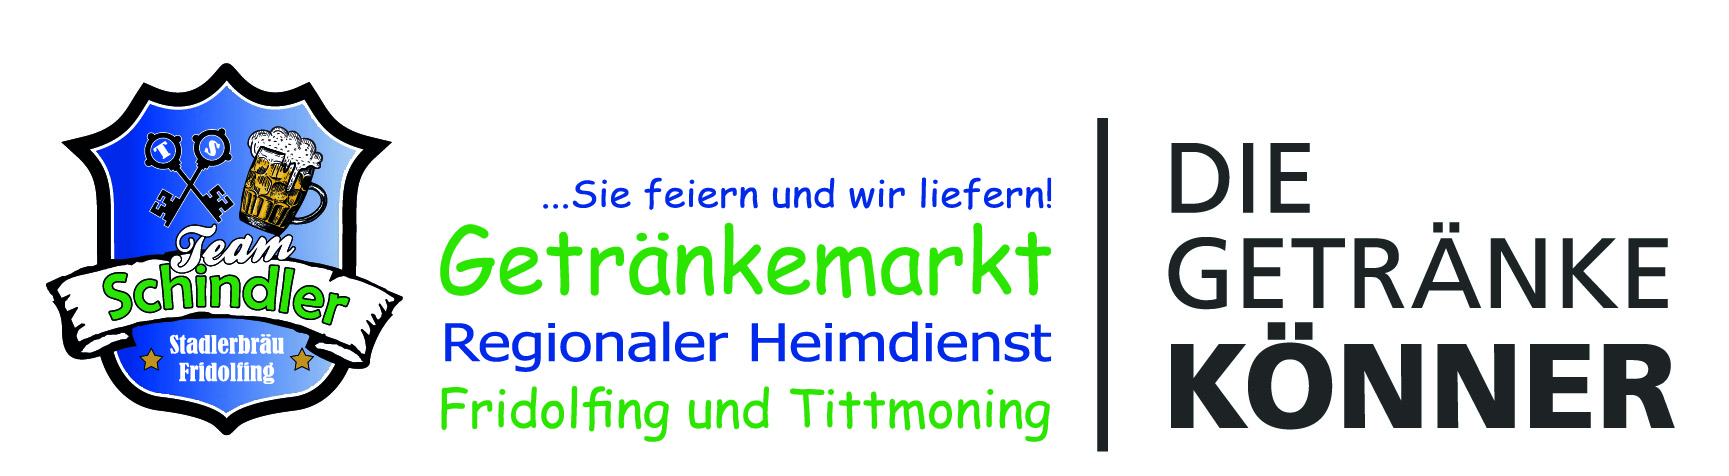 Getraenke_Schindler_Logo